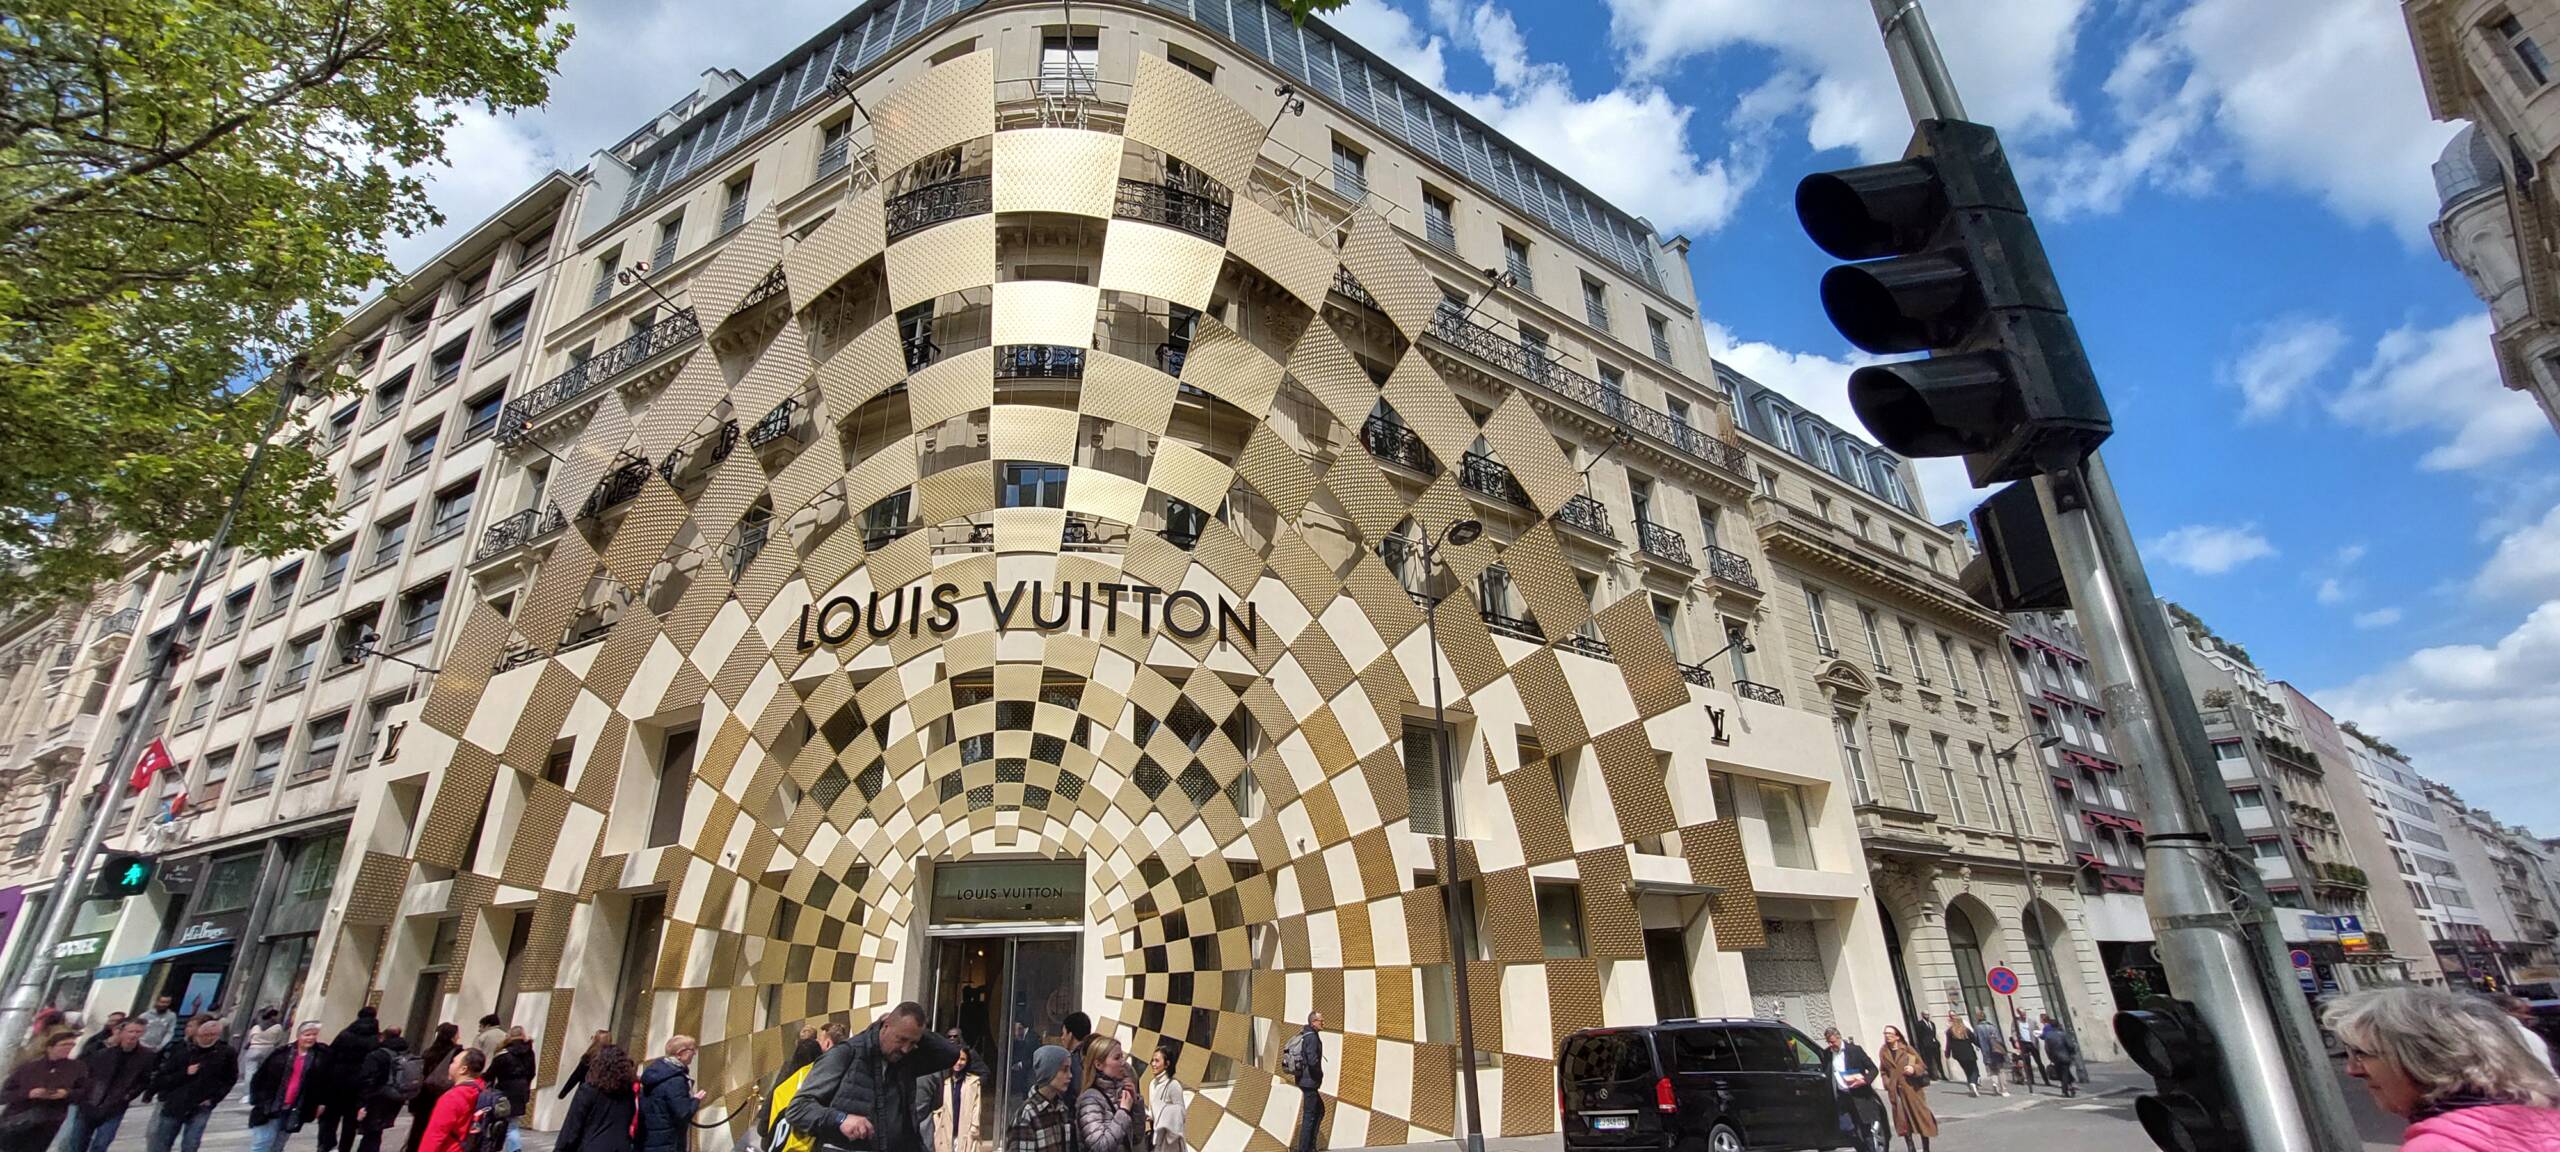 The Louis Vuitton store